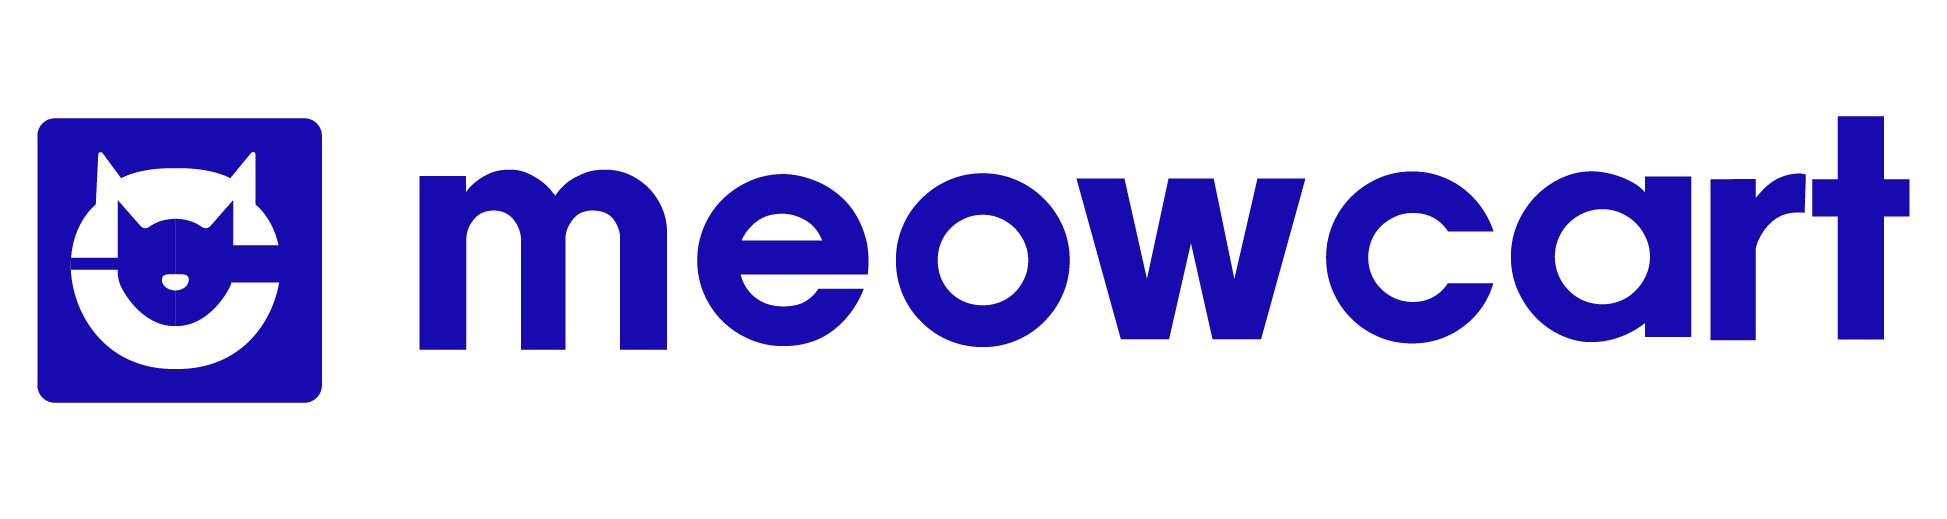 beehexa_meowcart-logo-02